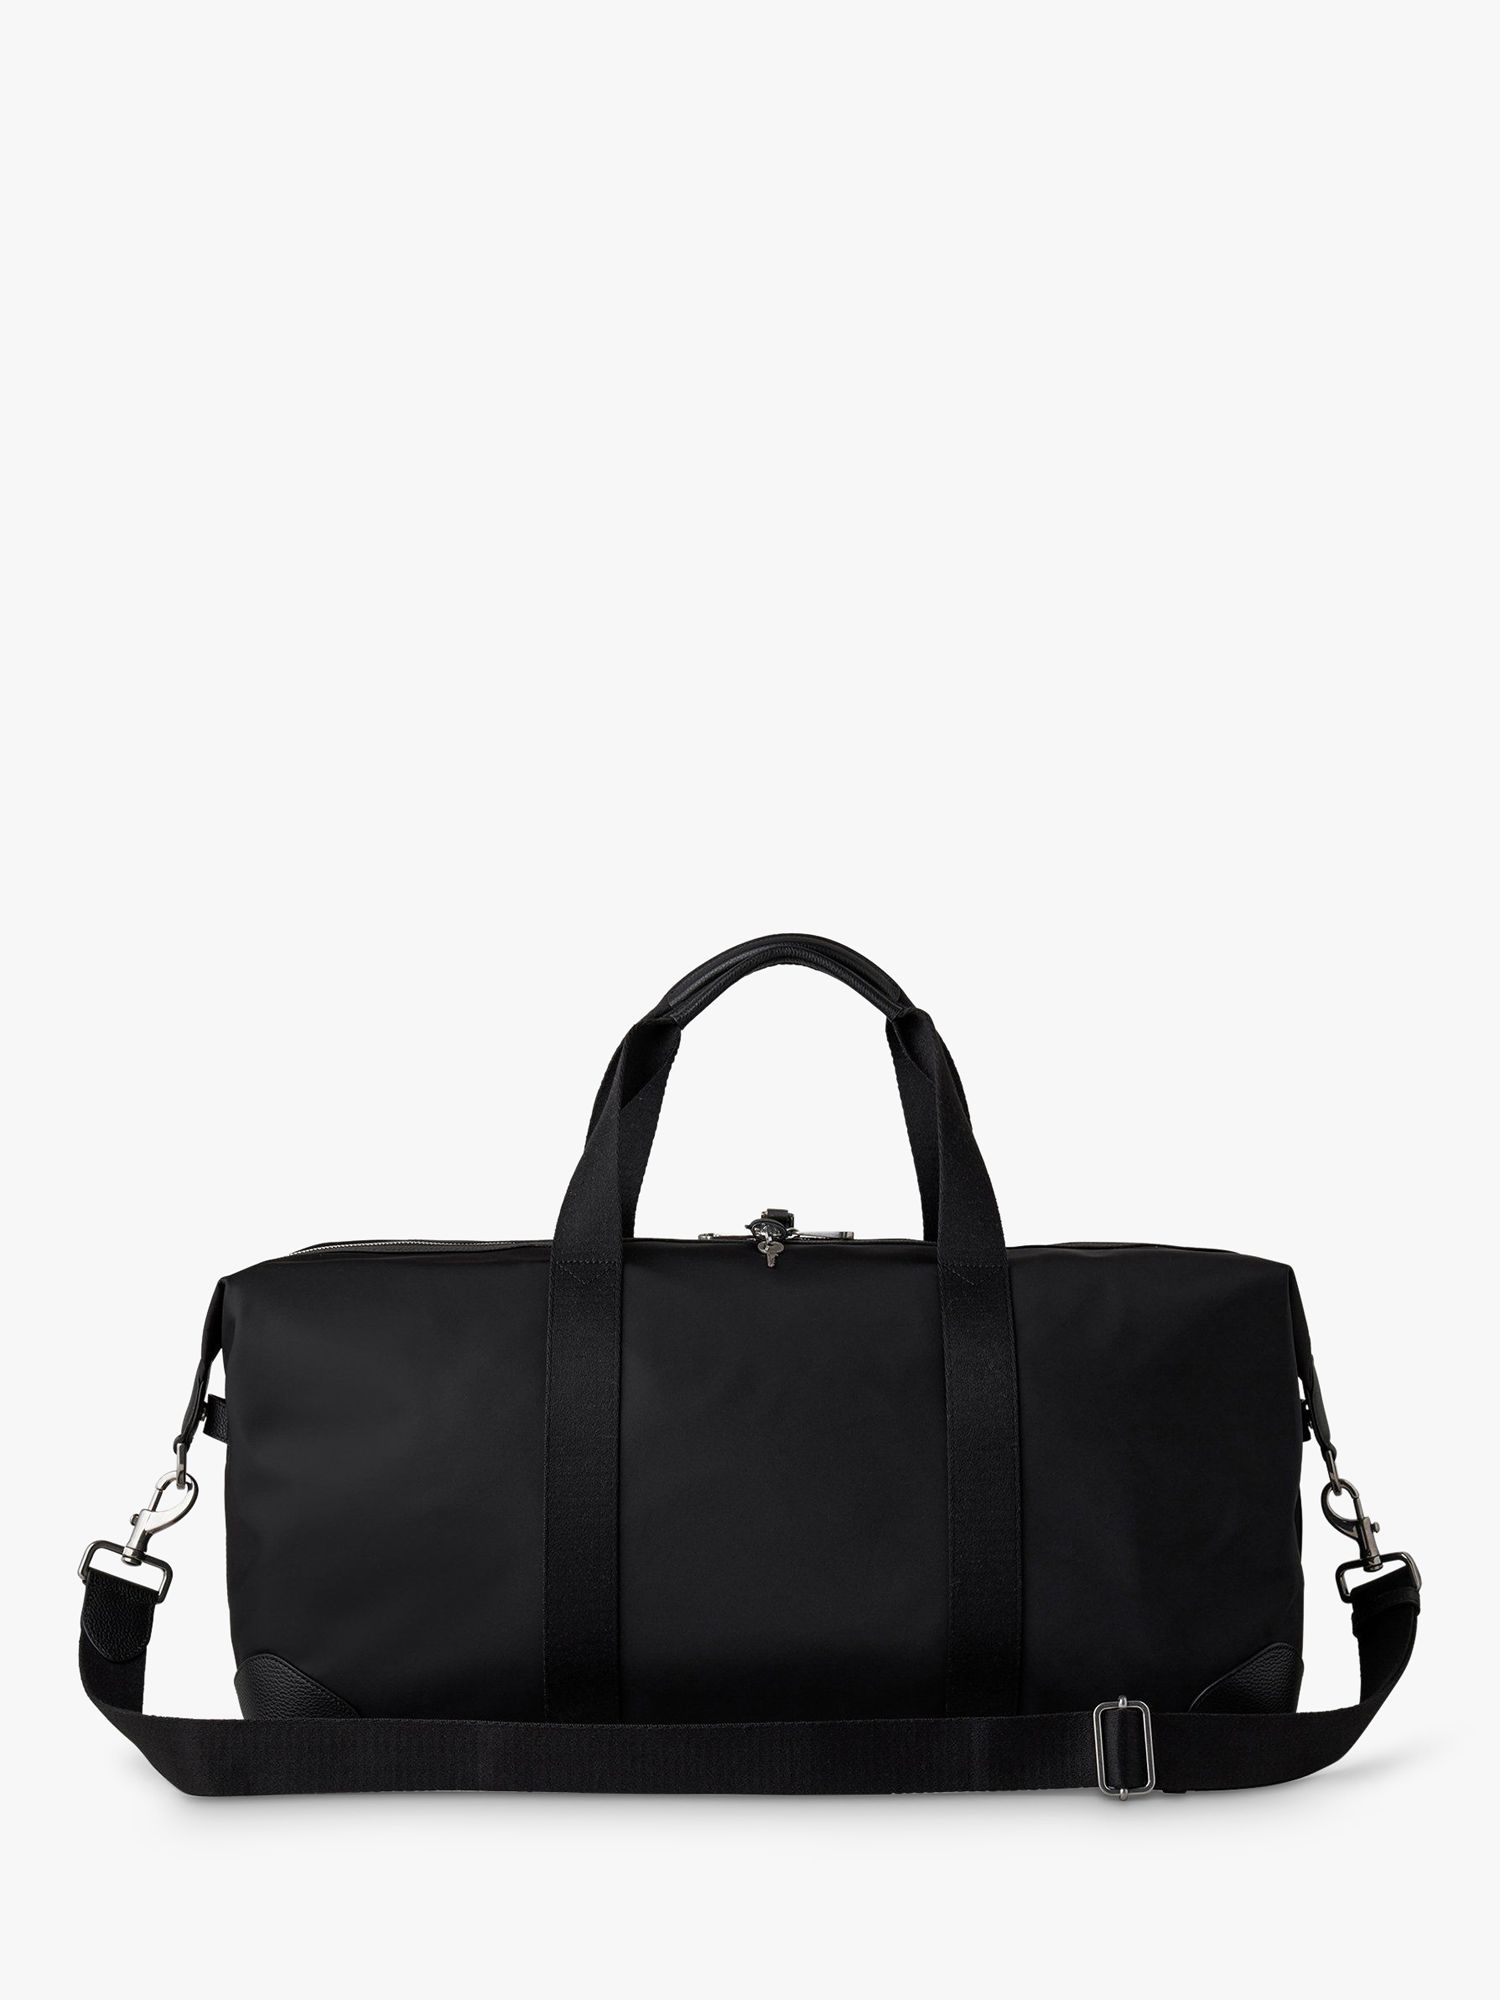 Mulberry Medium Clipper Travel Bag, Black